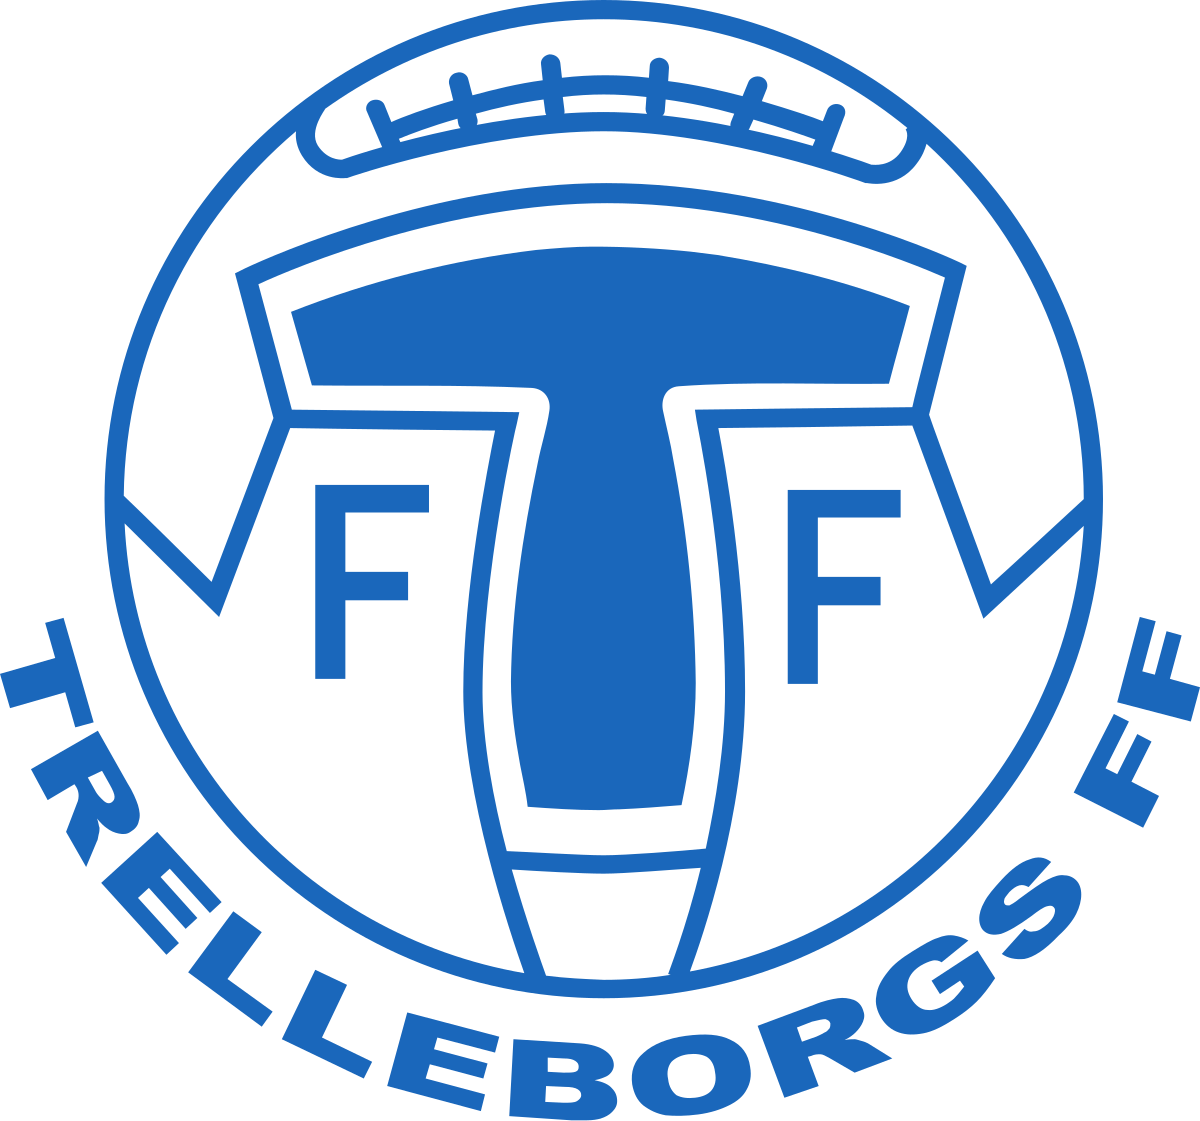 Trelleborg U-21 logo